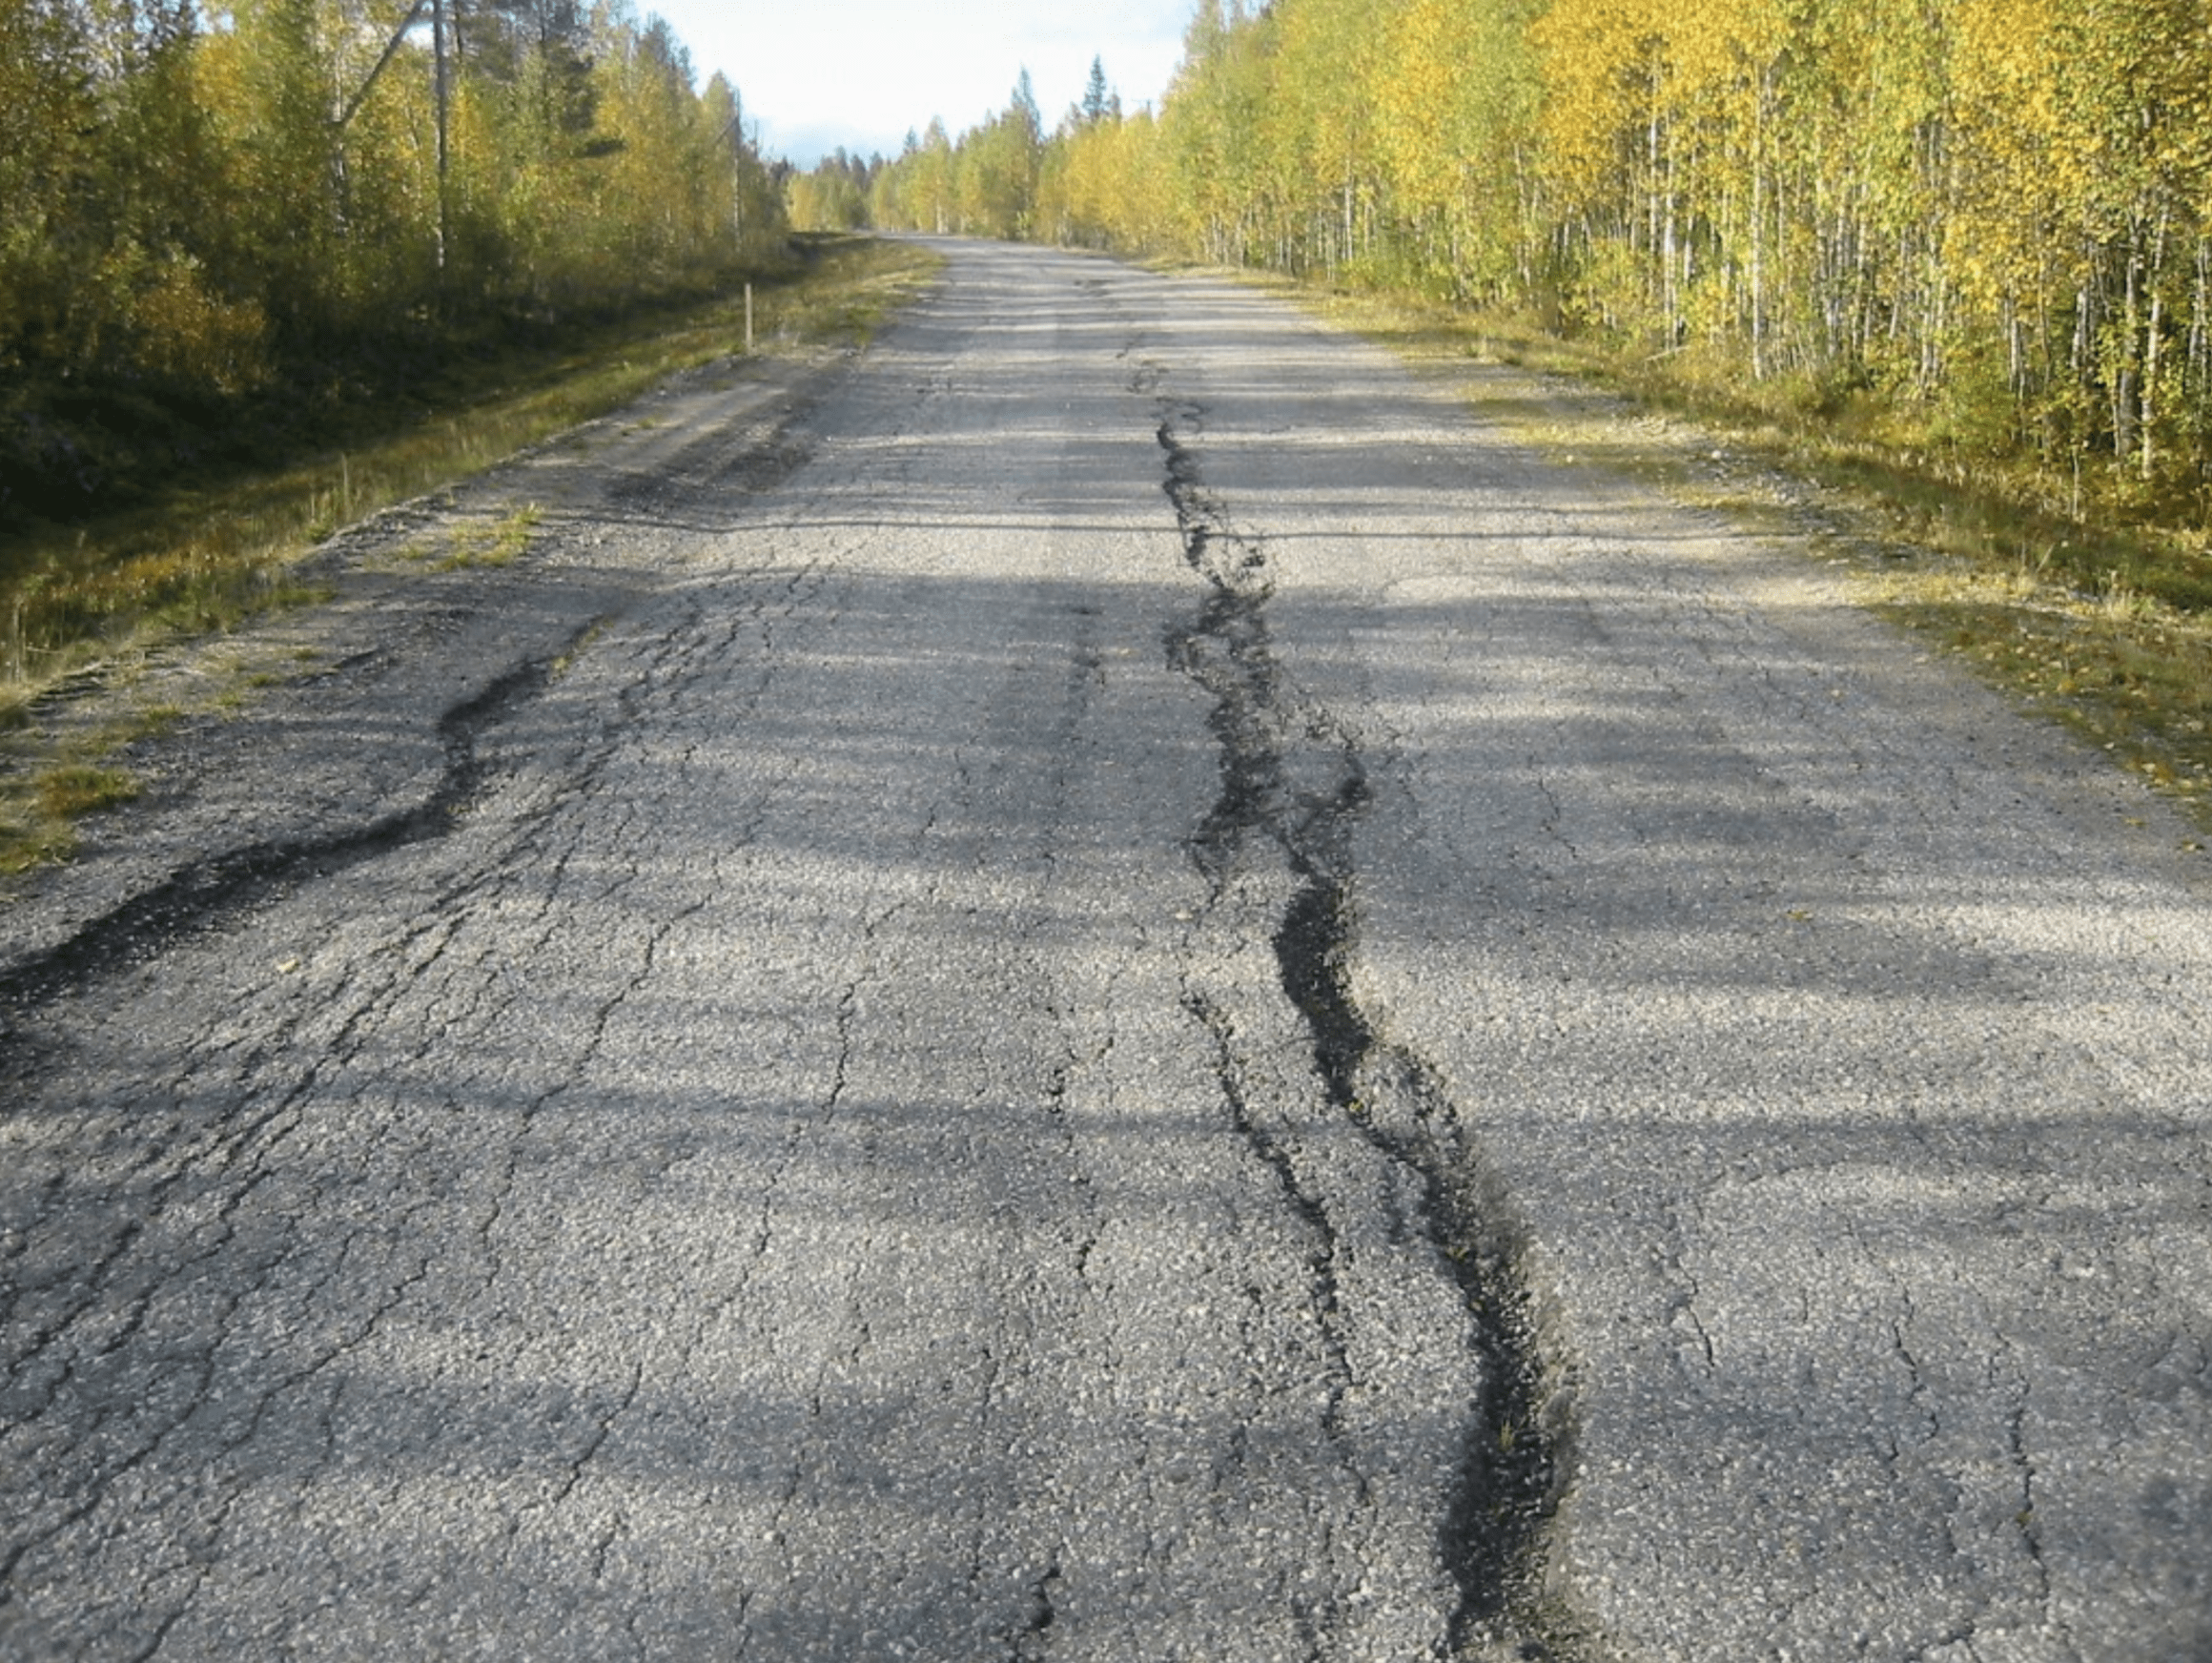 road pavement